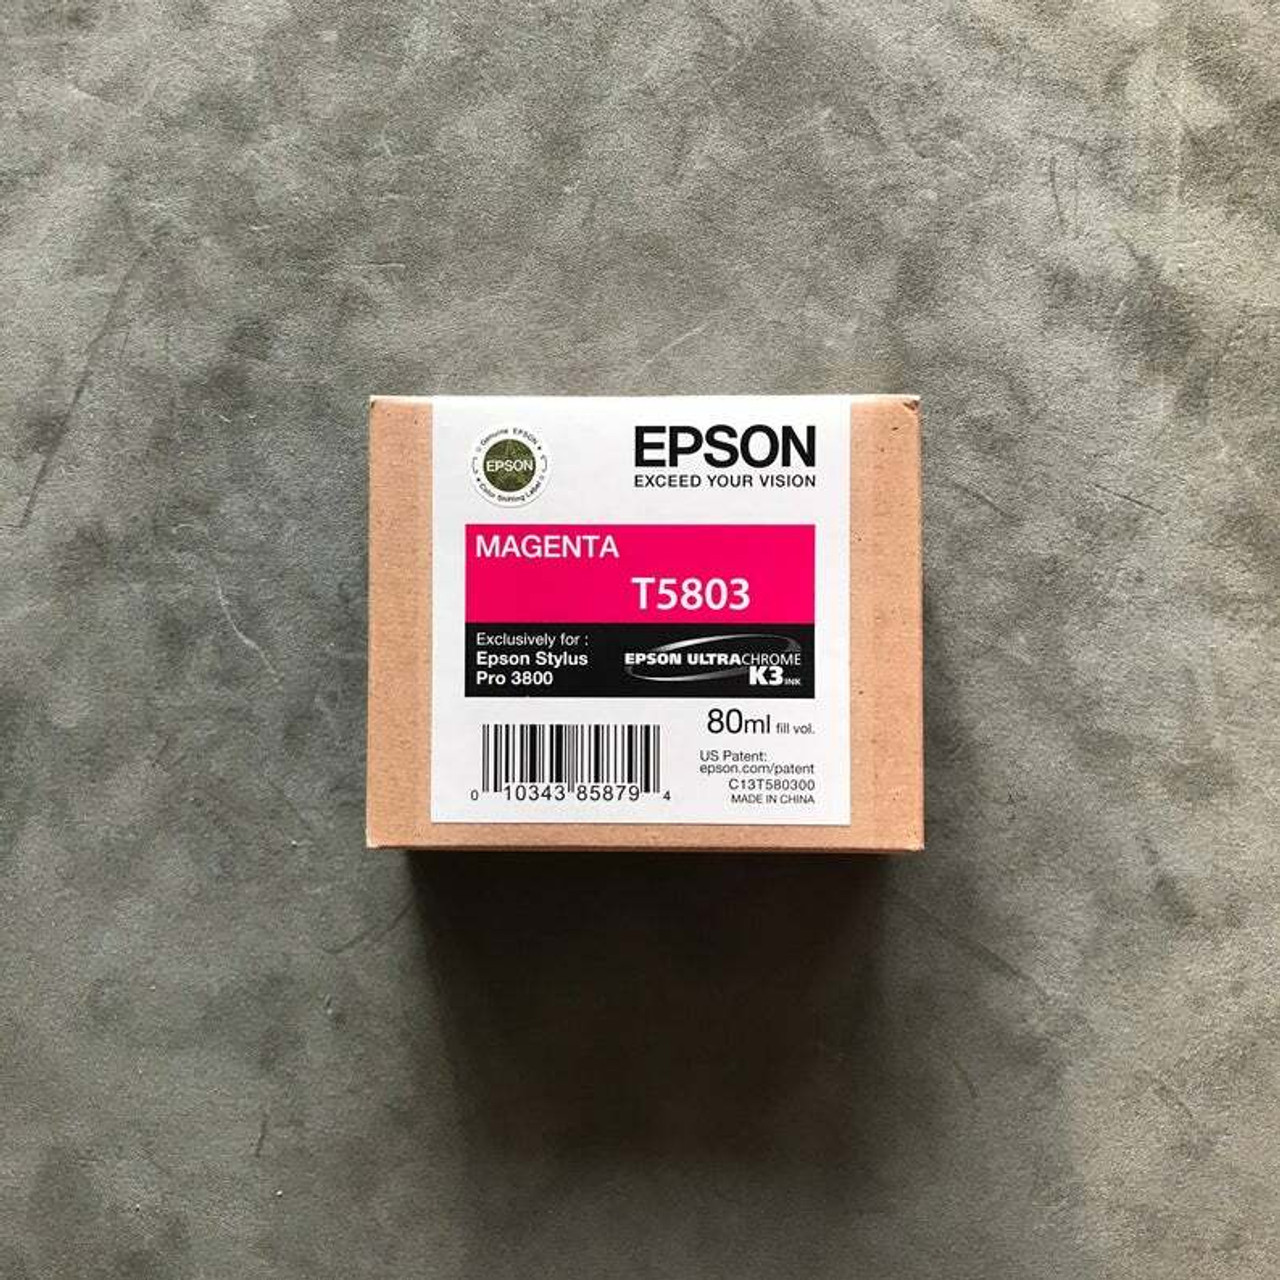 NINETEC ersetzt Epson T3593 35XL Magenta Tintenpatrone